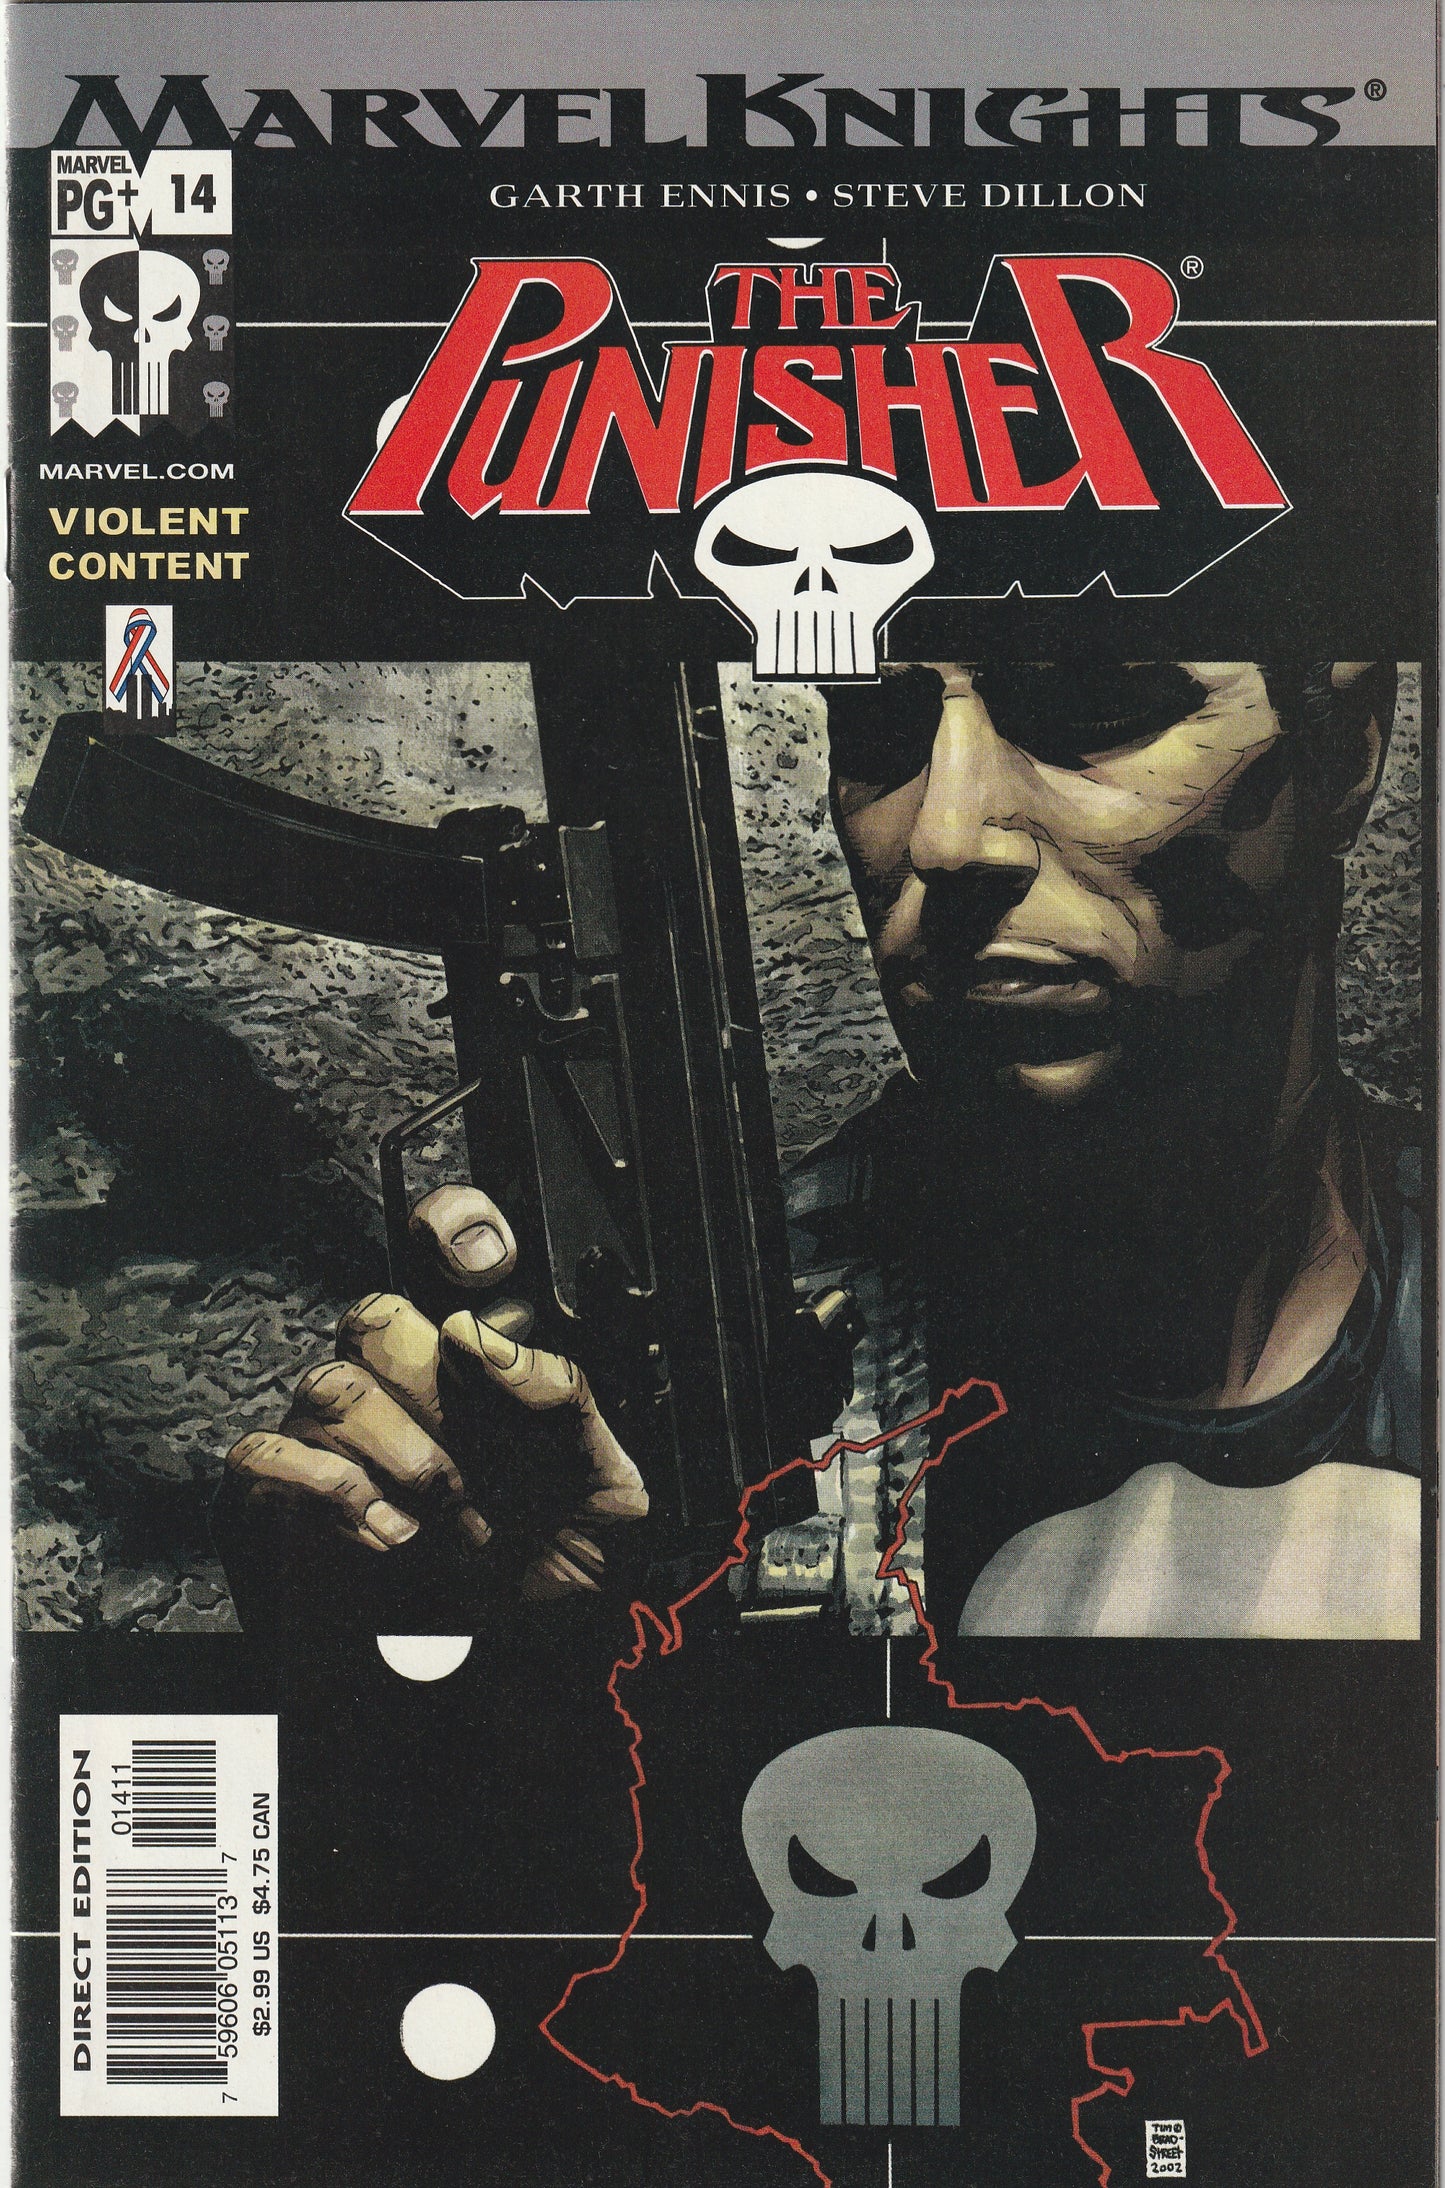 The Punisher #14 (Marvel Knights Vol 4, 2002) - Garth Ennis, Steve Dillon